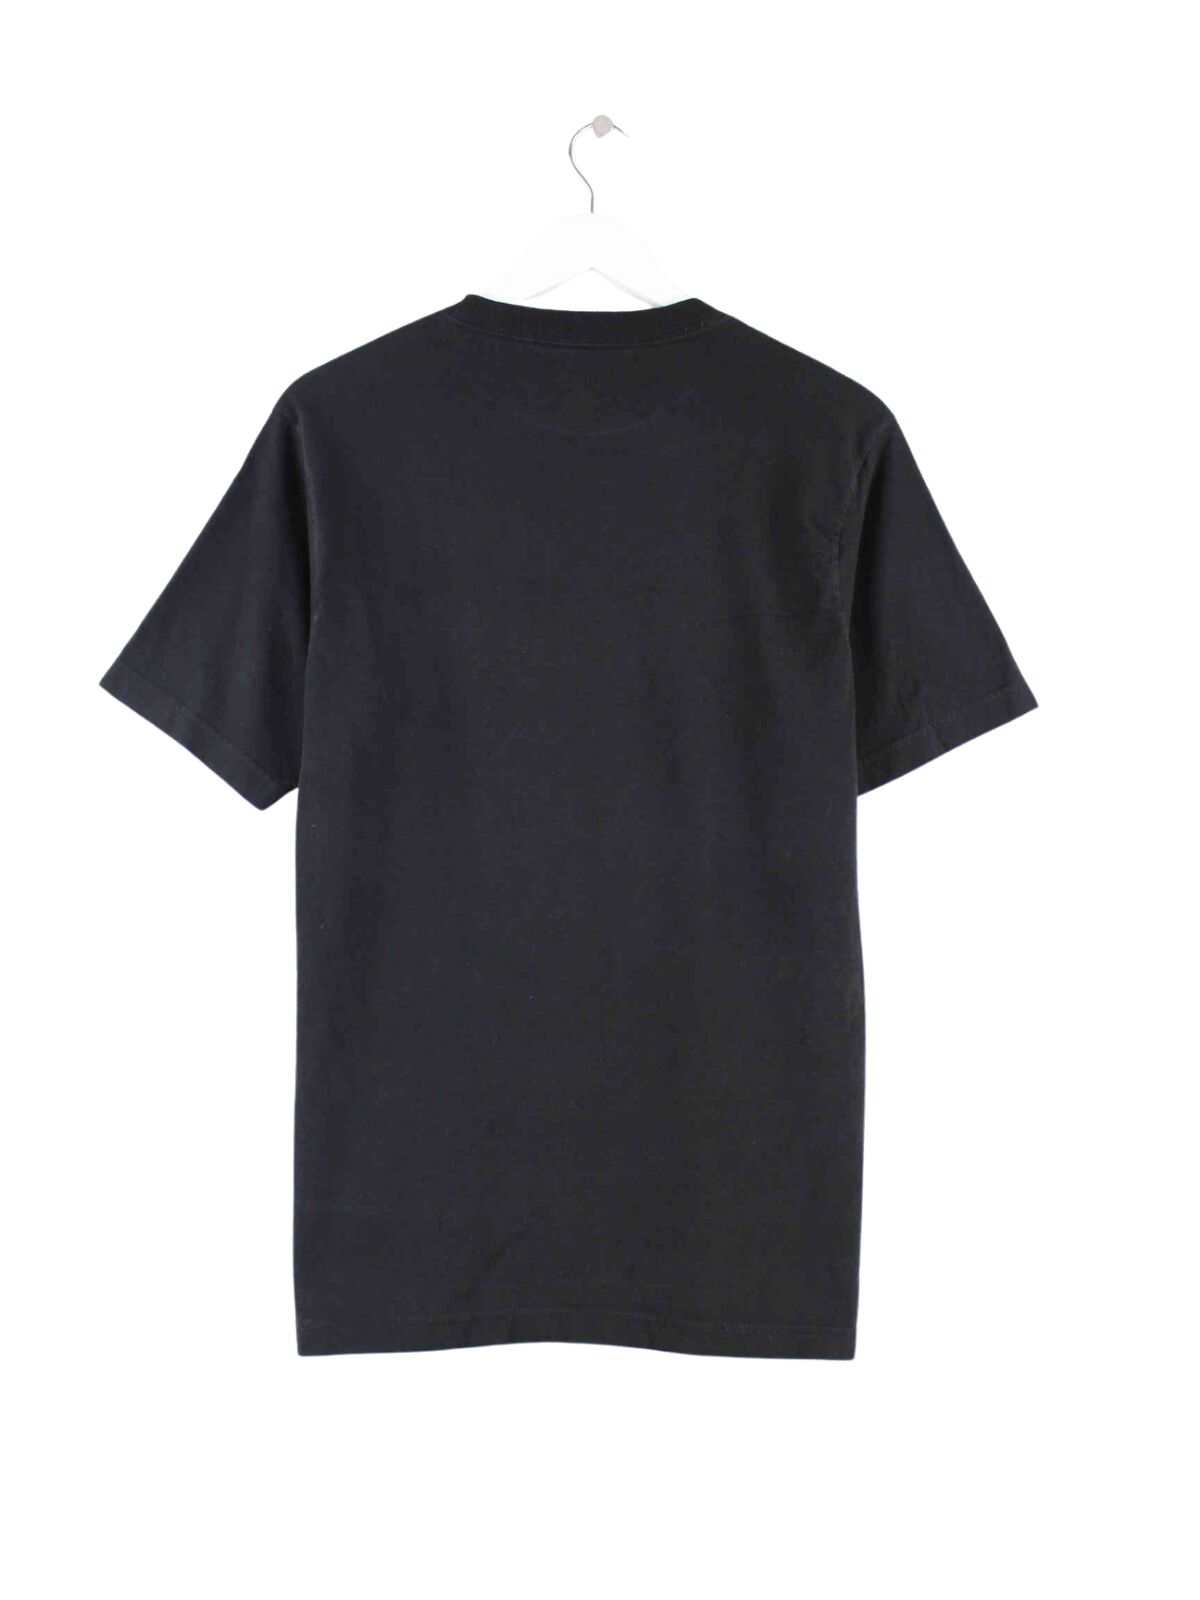 Reebok Steelers Print T-Shirt Schwarz S (back image)